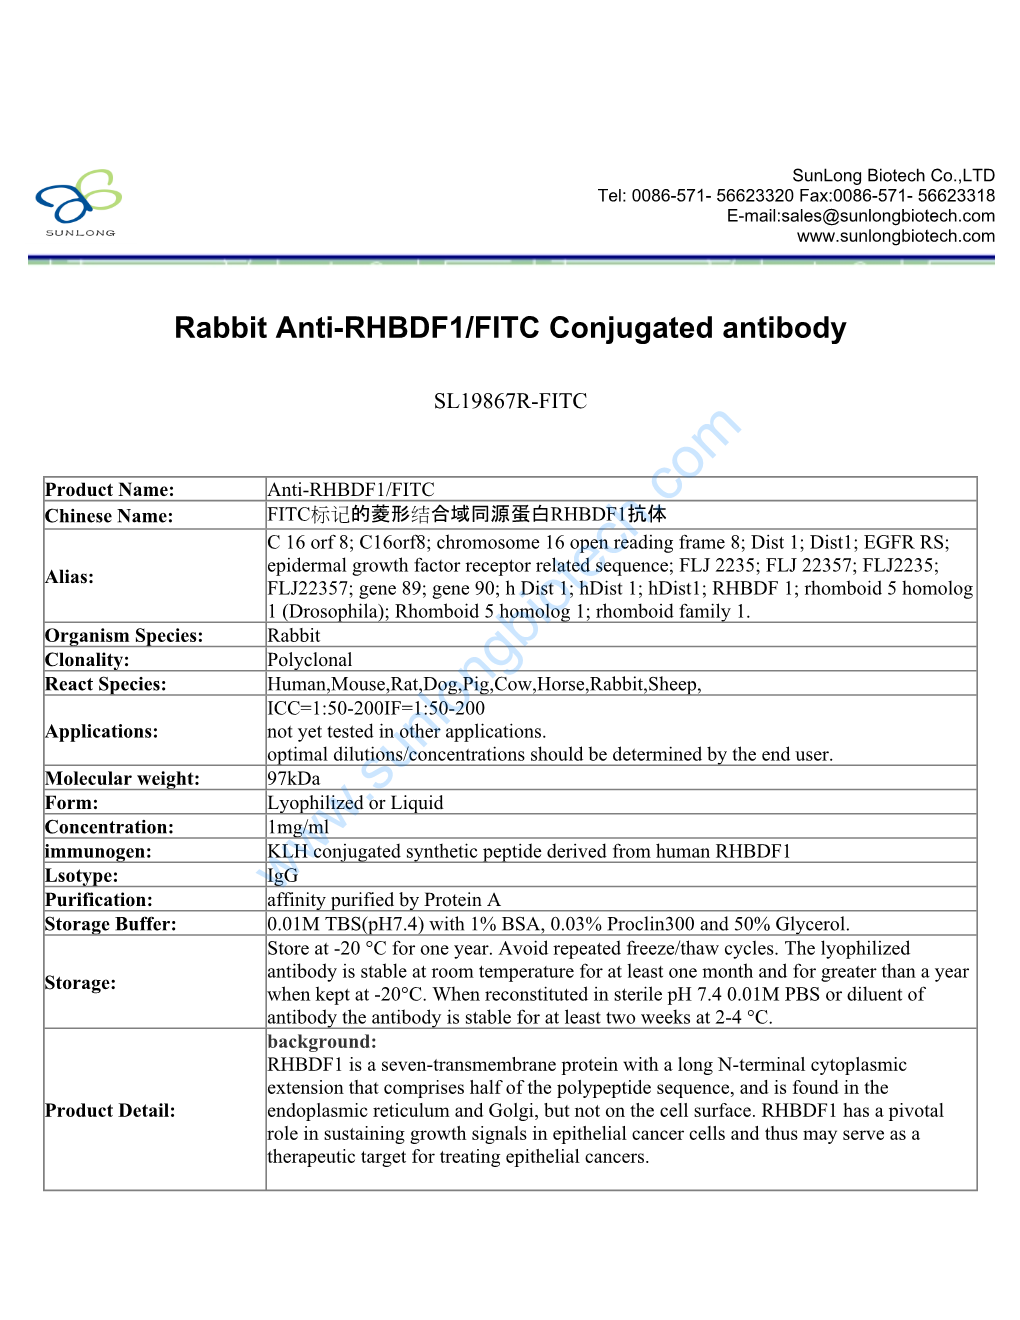 Rabbit Anti-RHBDF1/FITC Conjugated Antibody-SL19867R-FITC